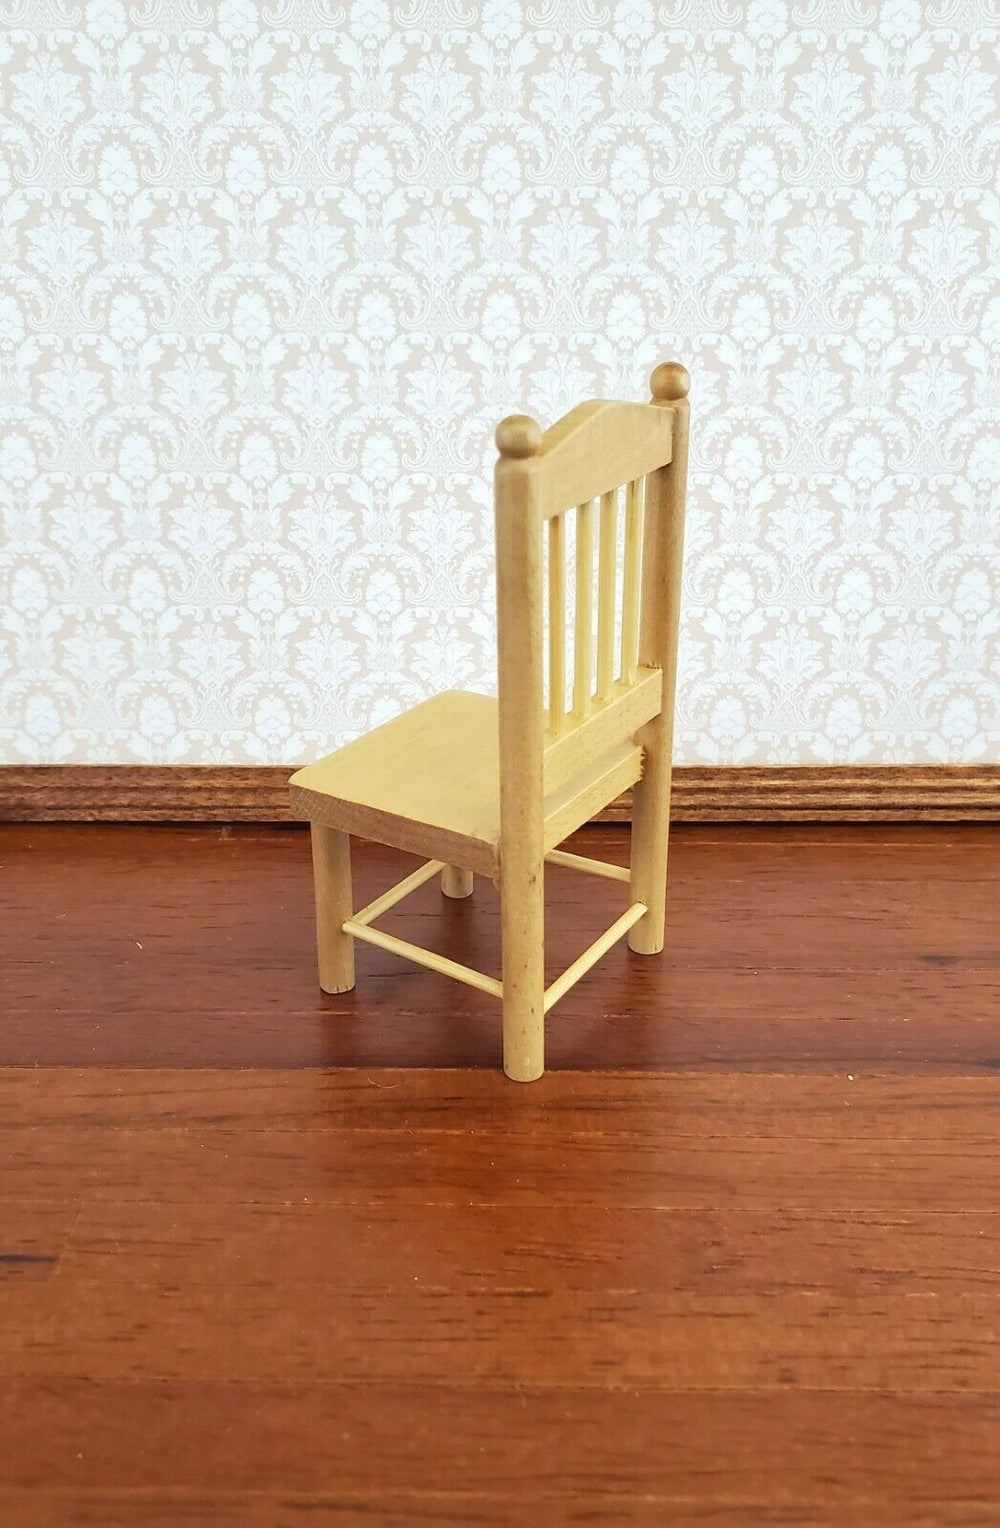 Dollhouse Miniature Small Chair Light Oak Wood 1:12 Scale 3 1/4" tall - Miniature Crush